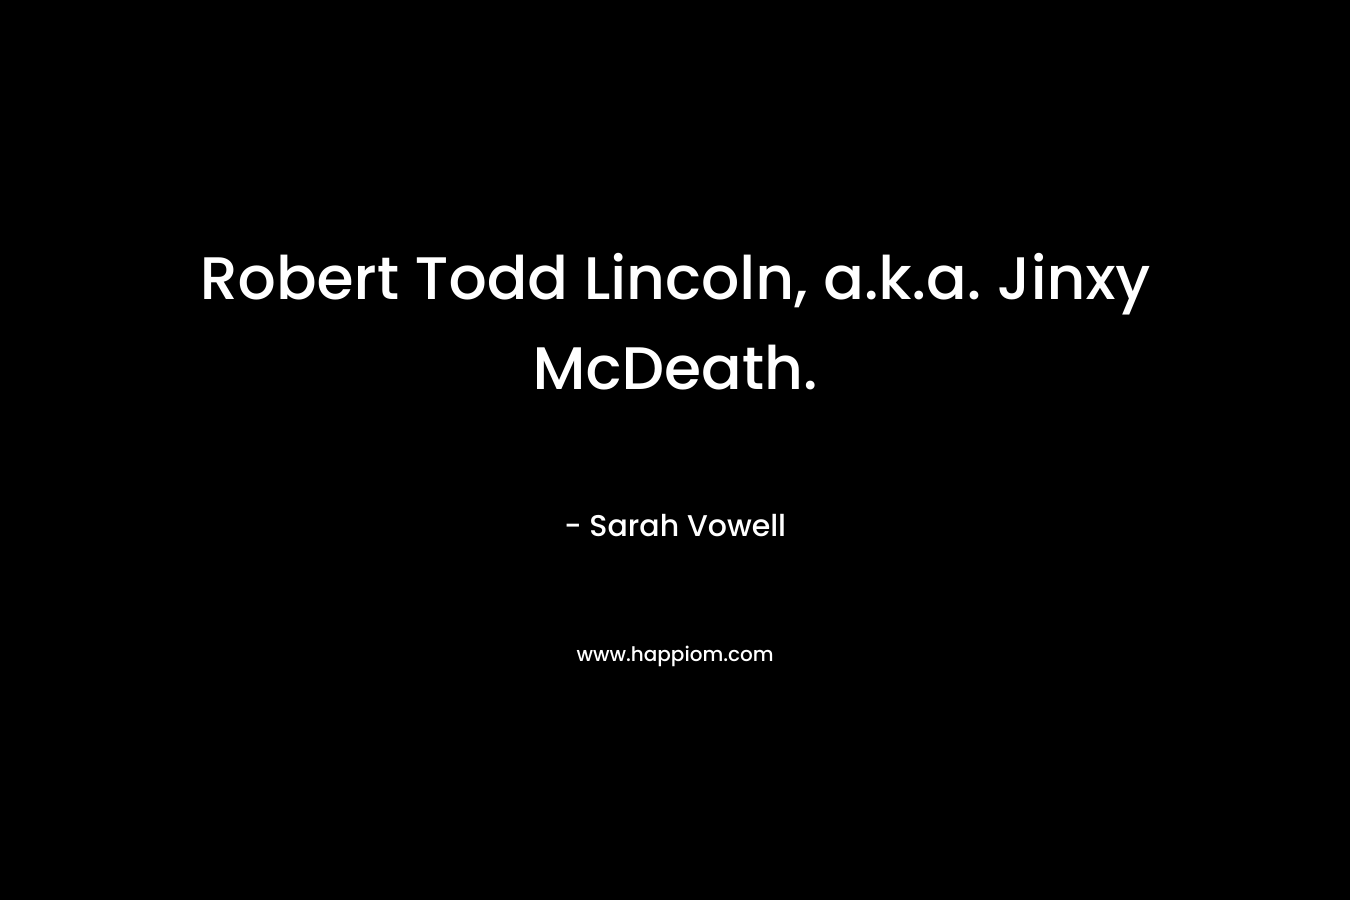 Robert Todd Lincoln, a.k.a. Jinxy McDeath.